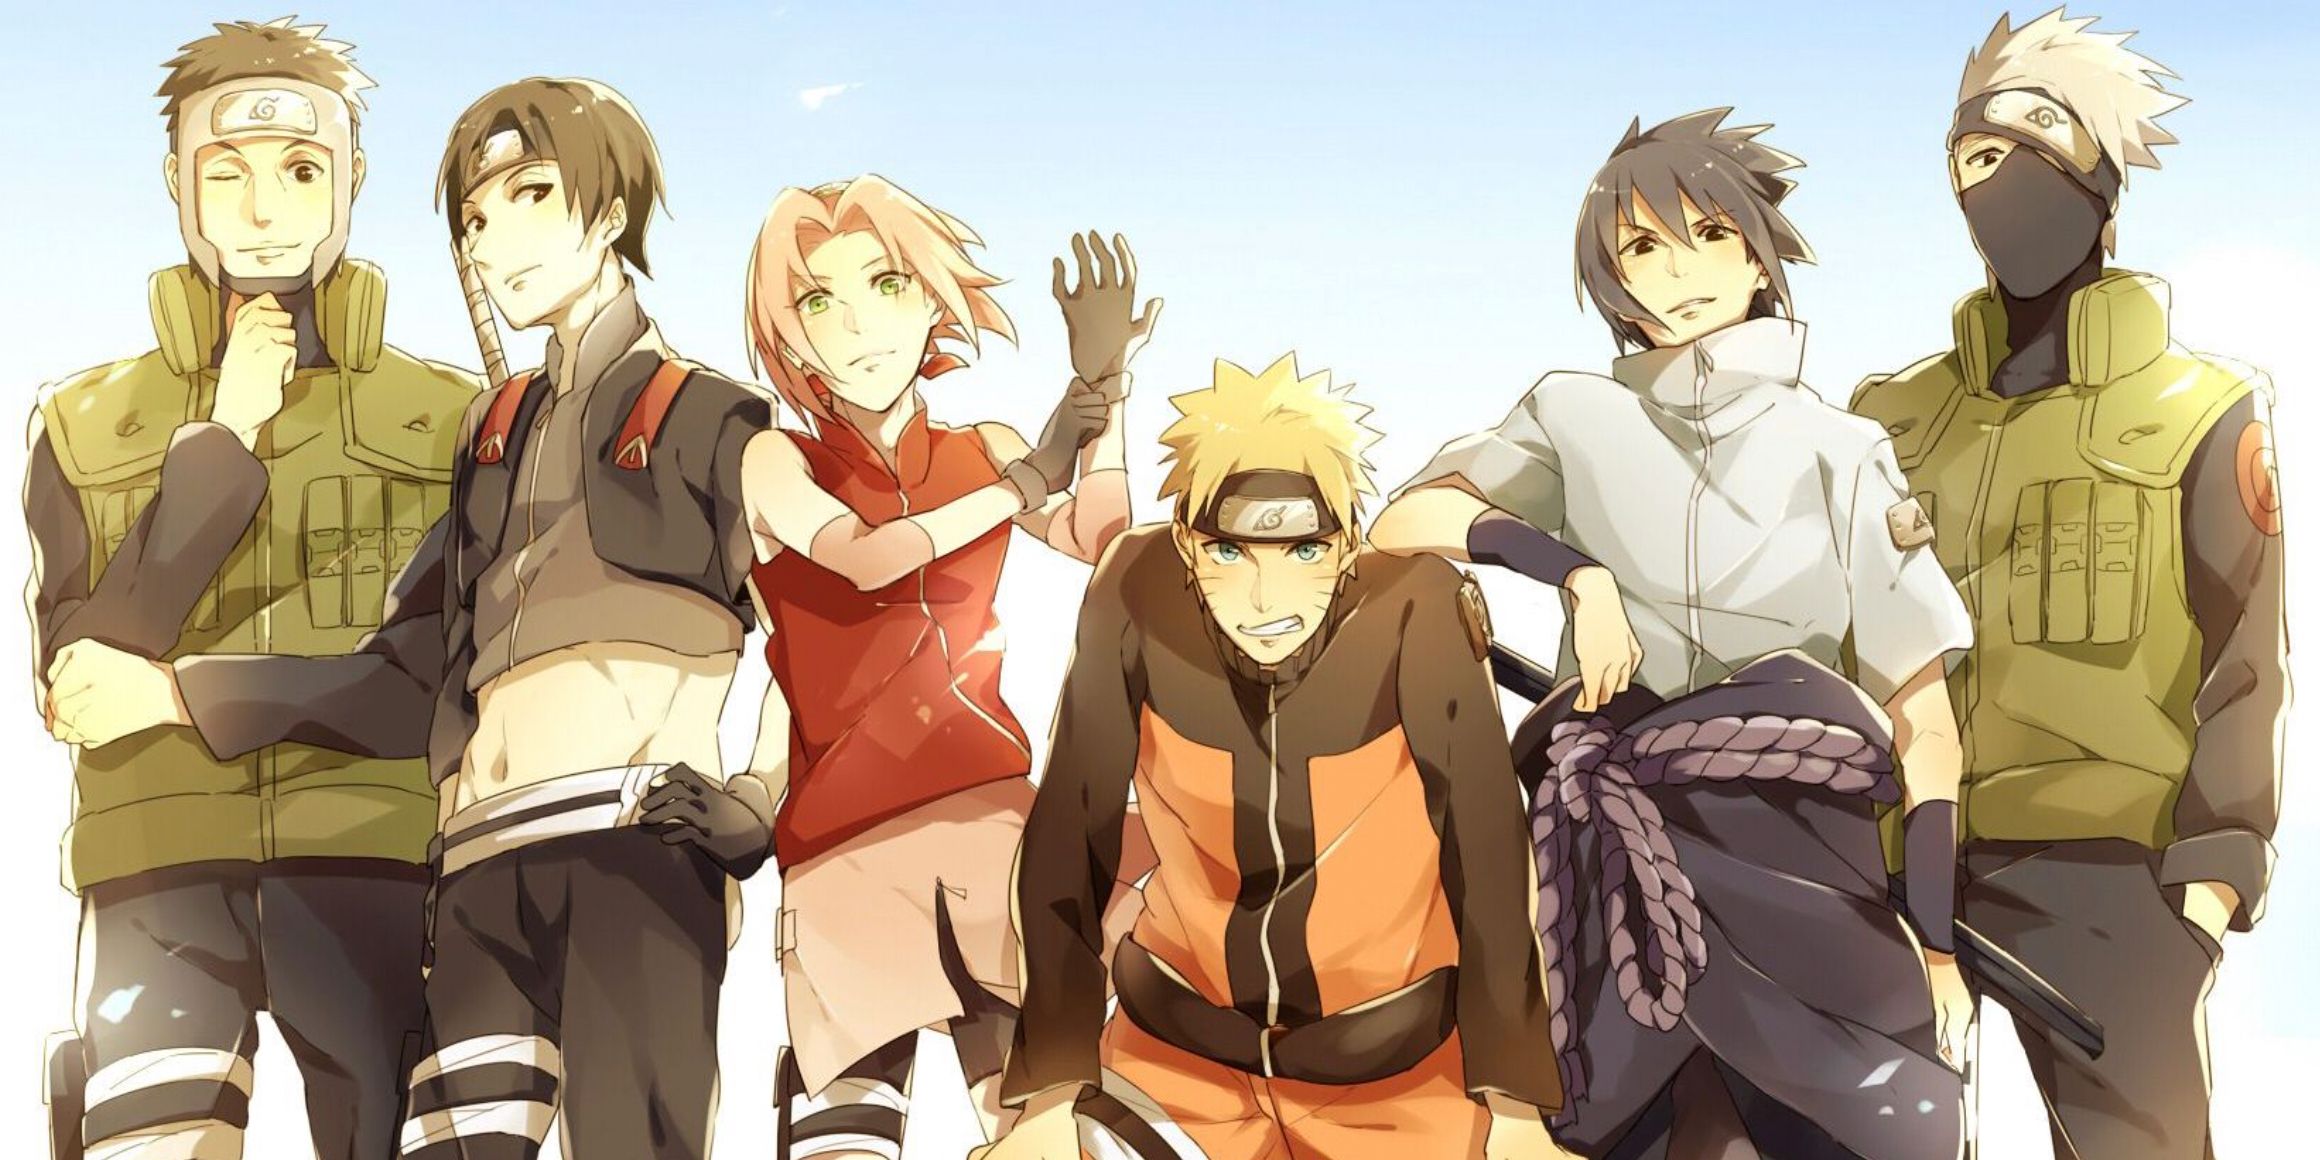 A manga illustration depicts Yamato, Sai, Sakura, Naruto, Sasuke, and Kakashi as the members of Team 7